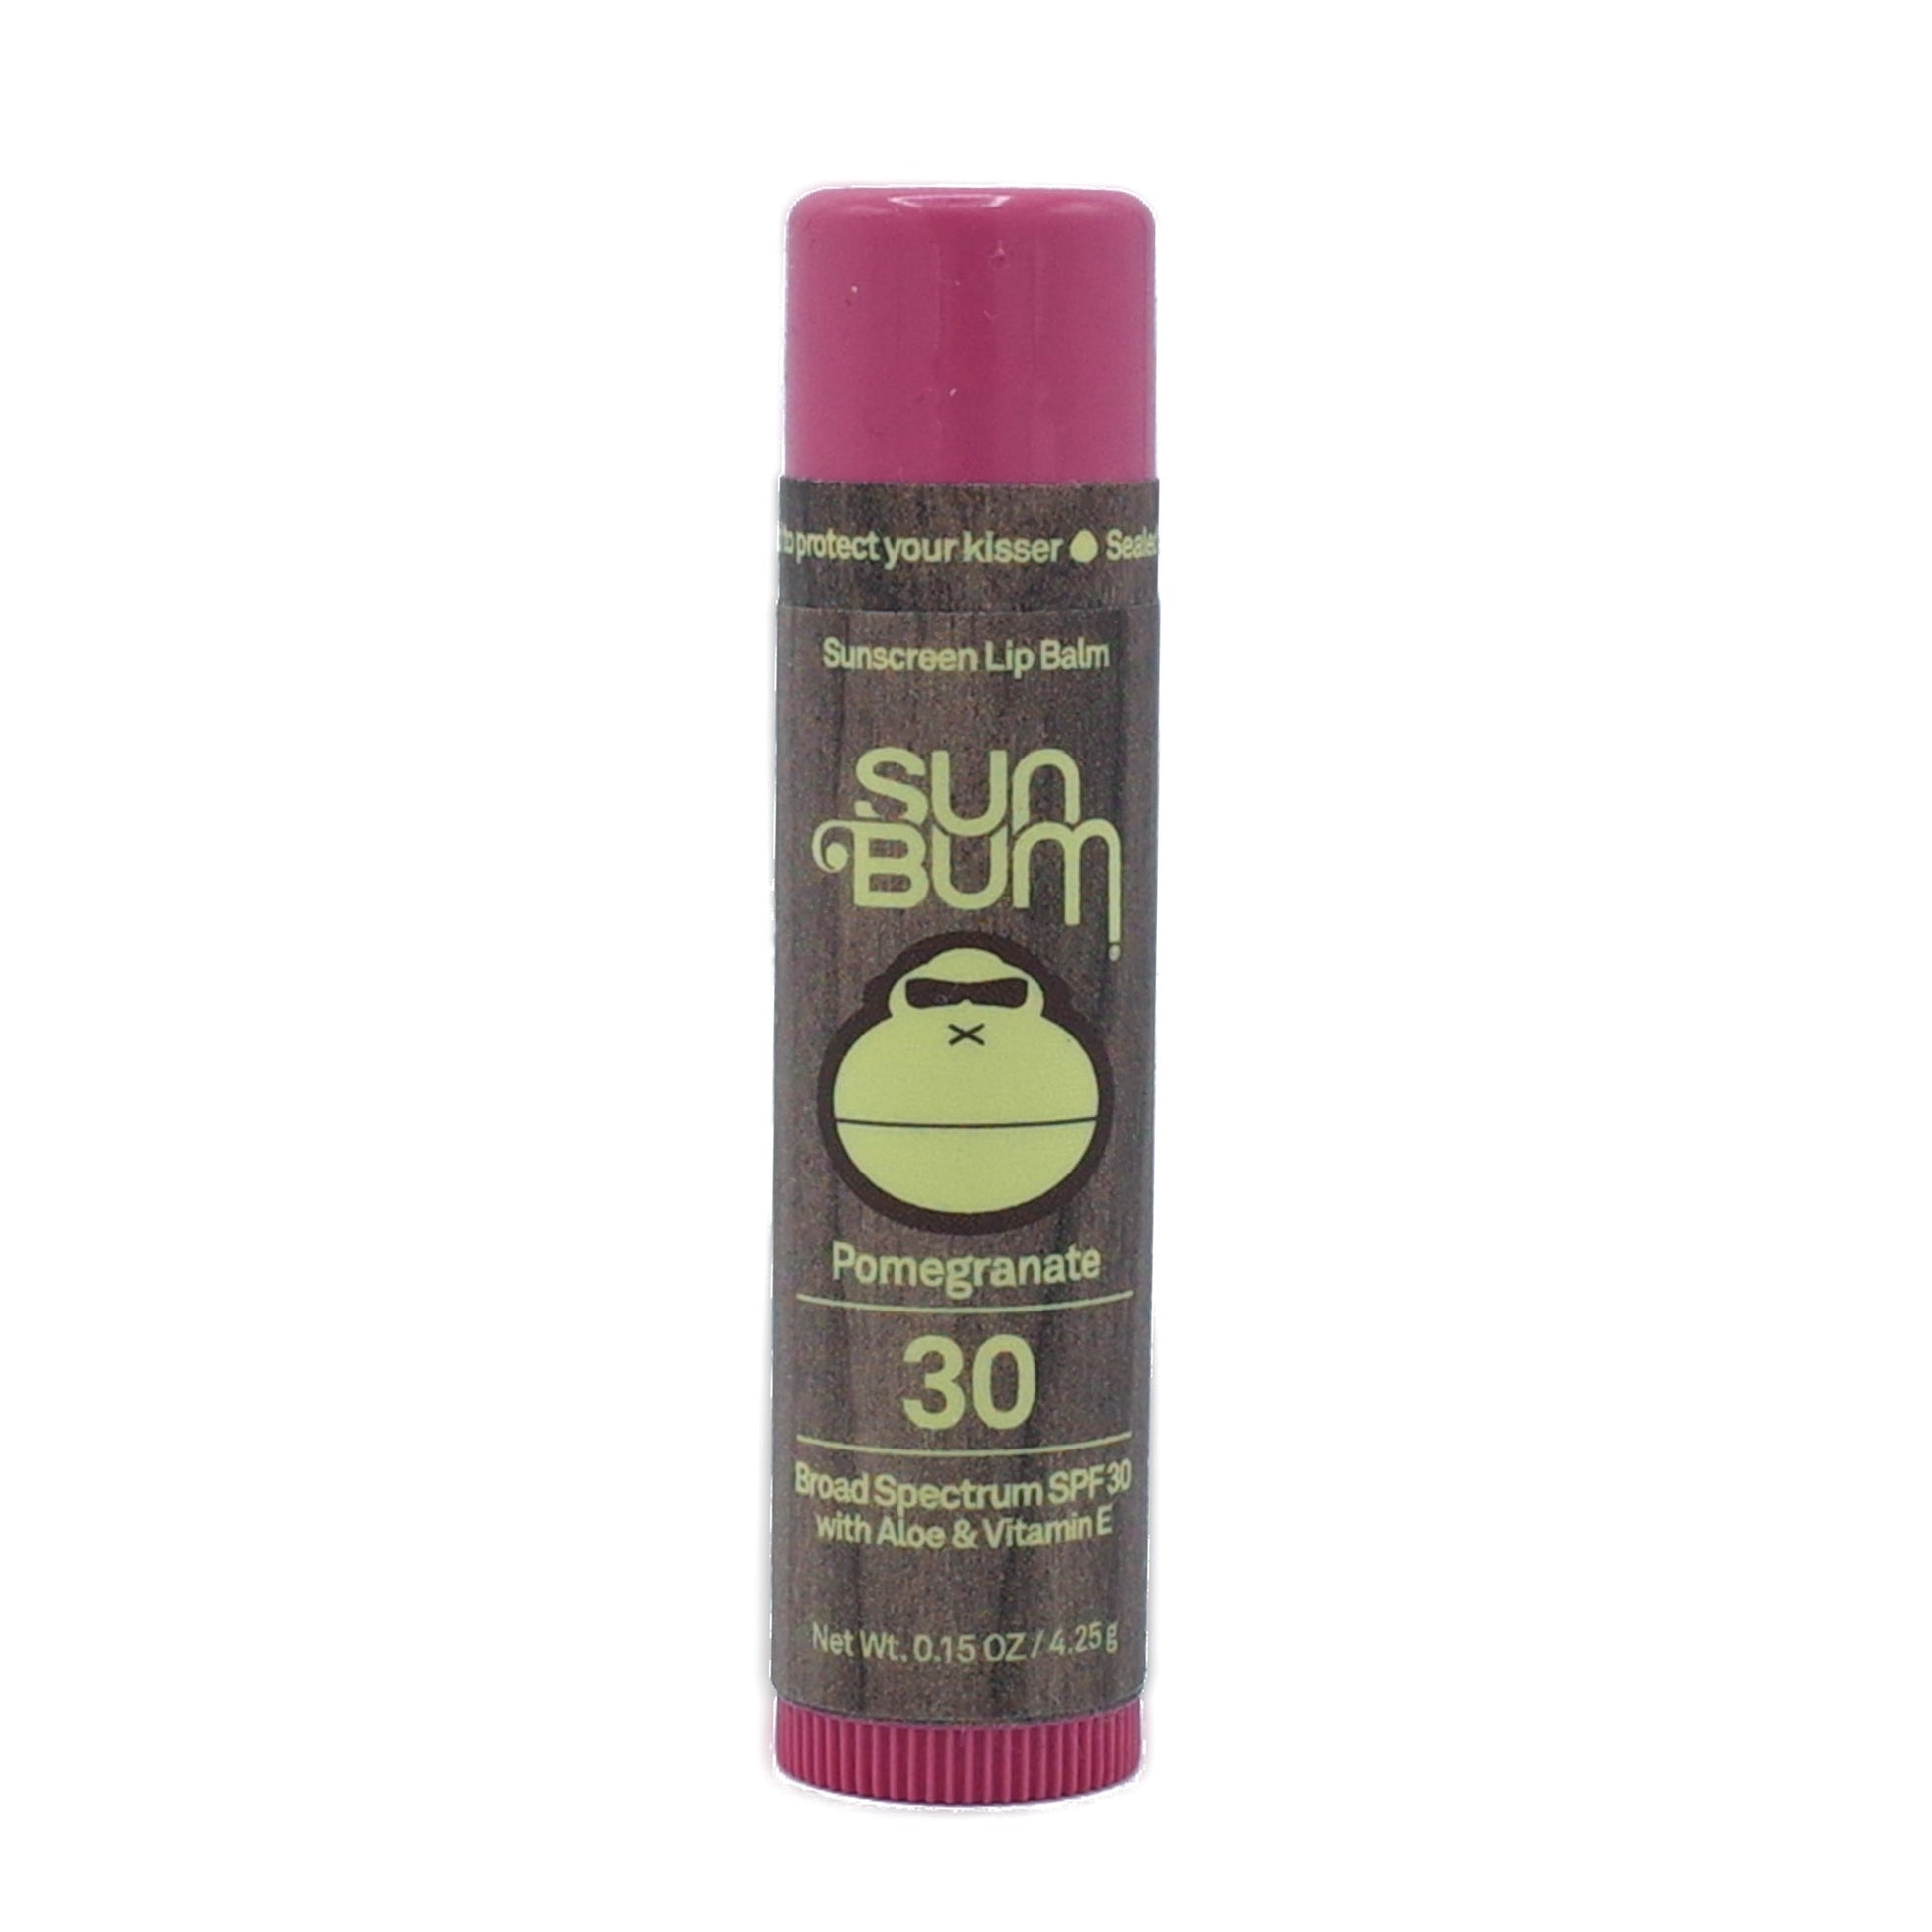 SUNBUM SPF 30 Lip Balm Pomegranate Default SUN BUM 